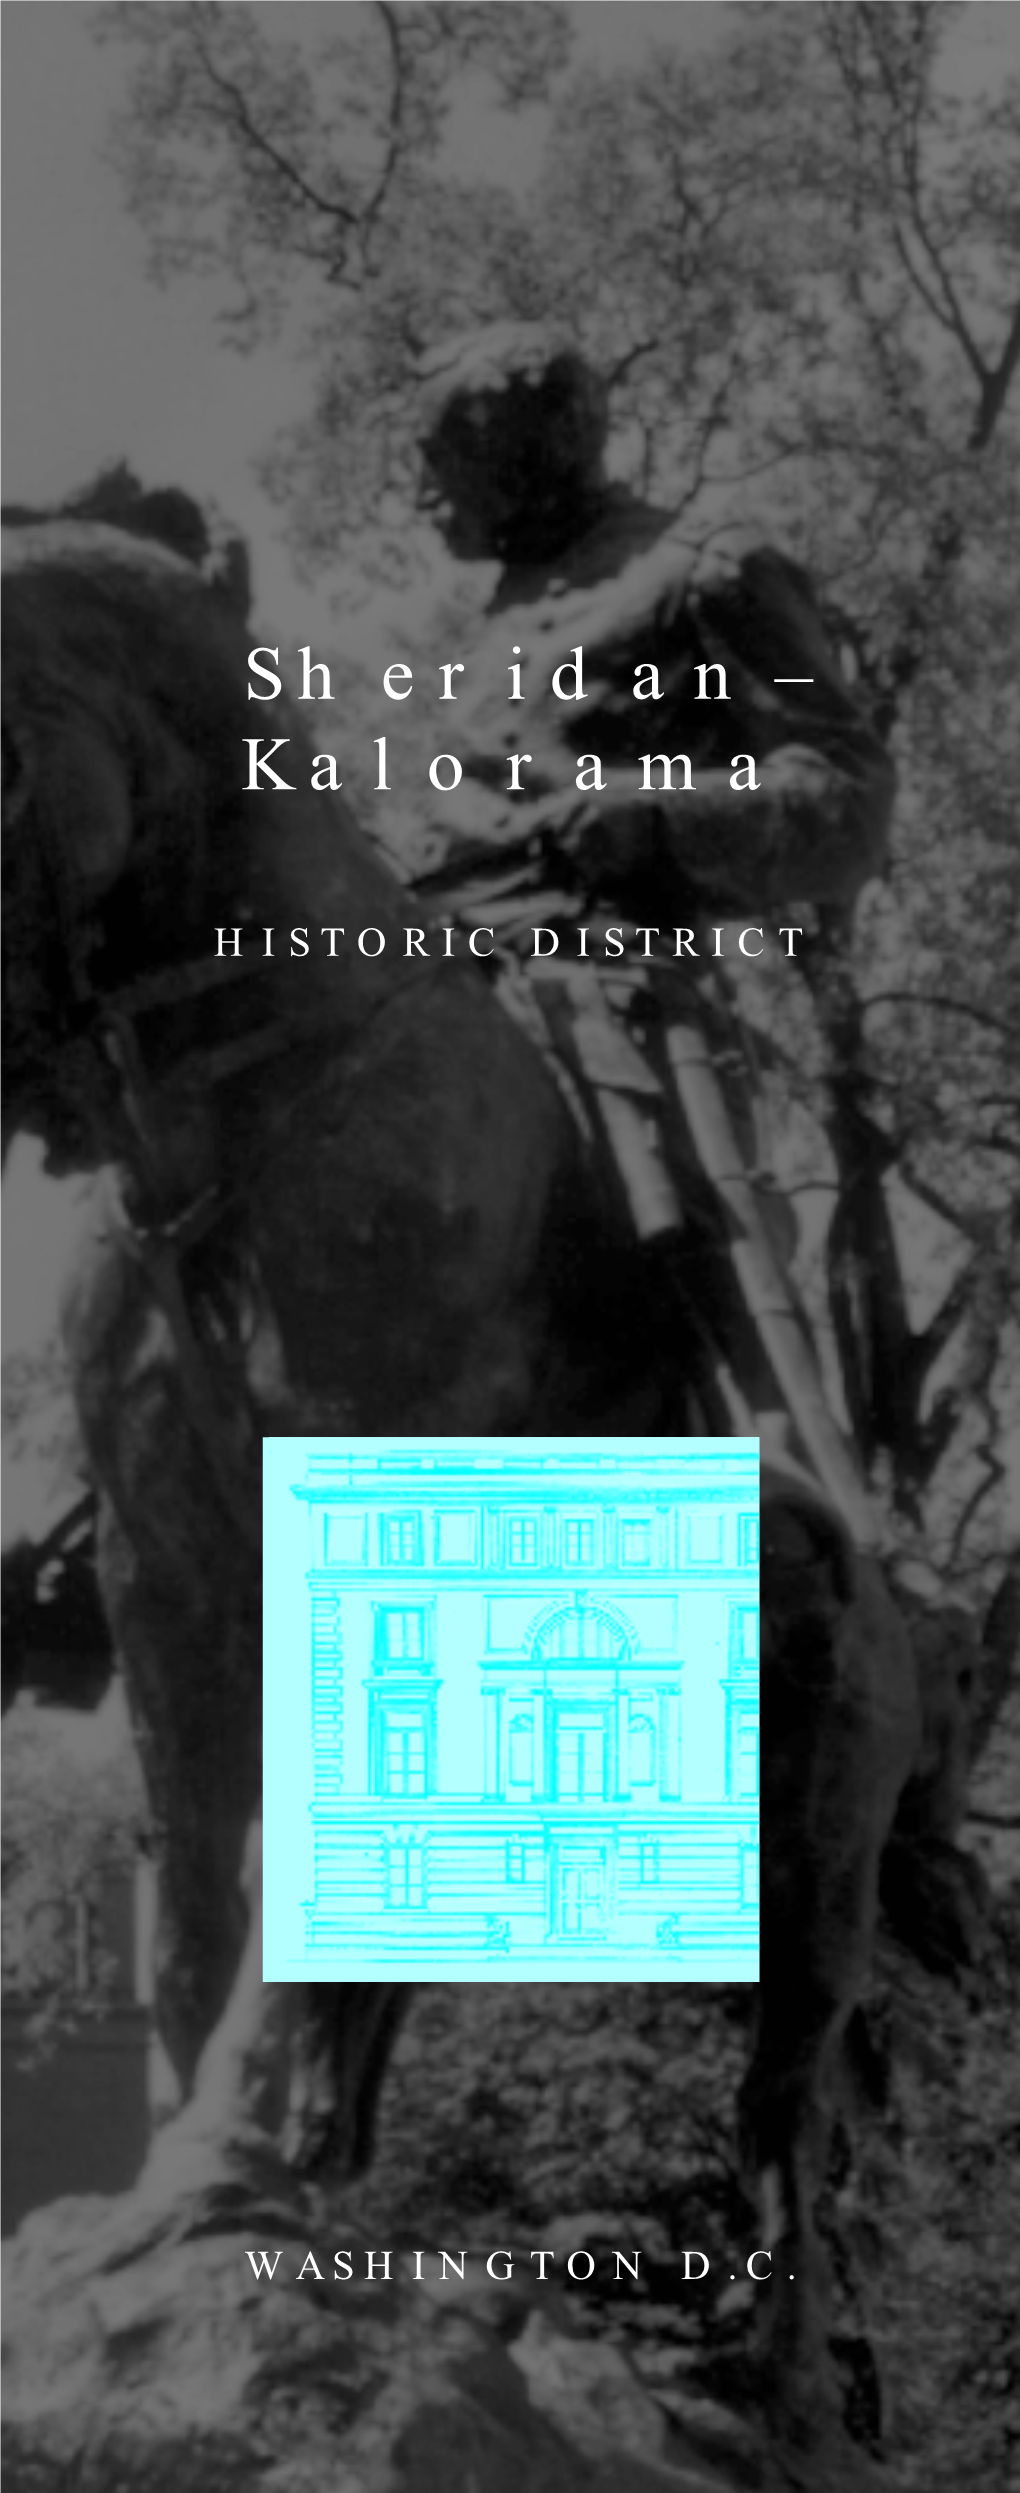 Sheridan Kalorama Historical District Application